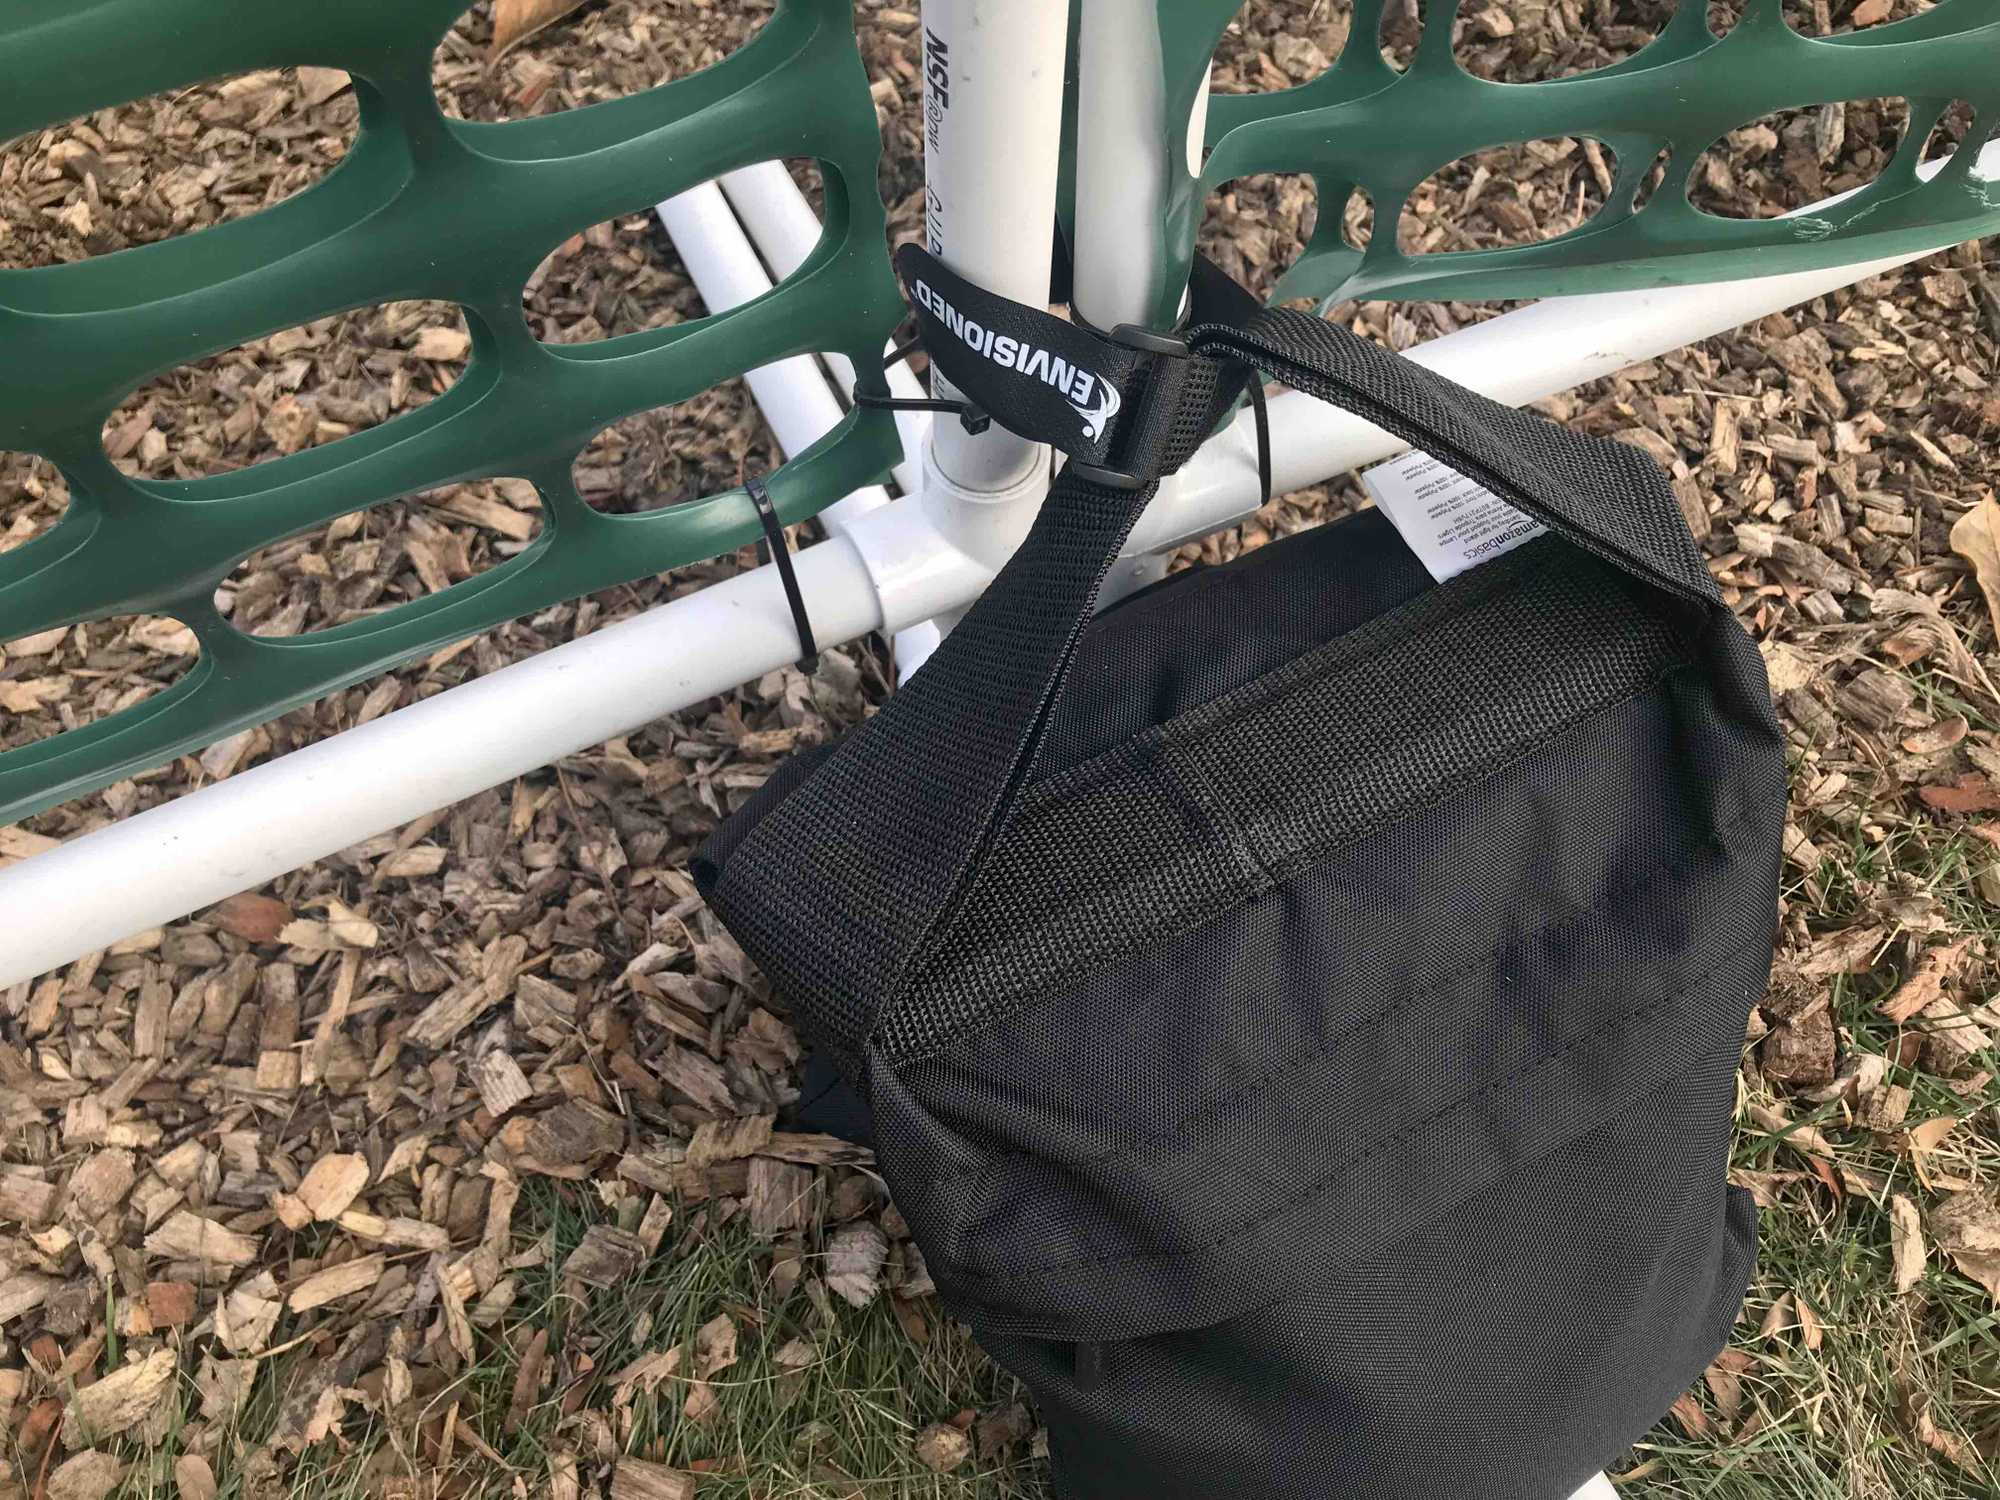 Velcro strap connecting gates and sandbag